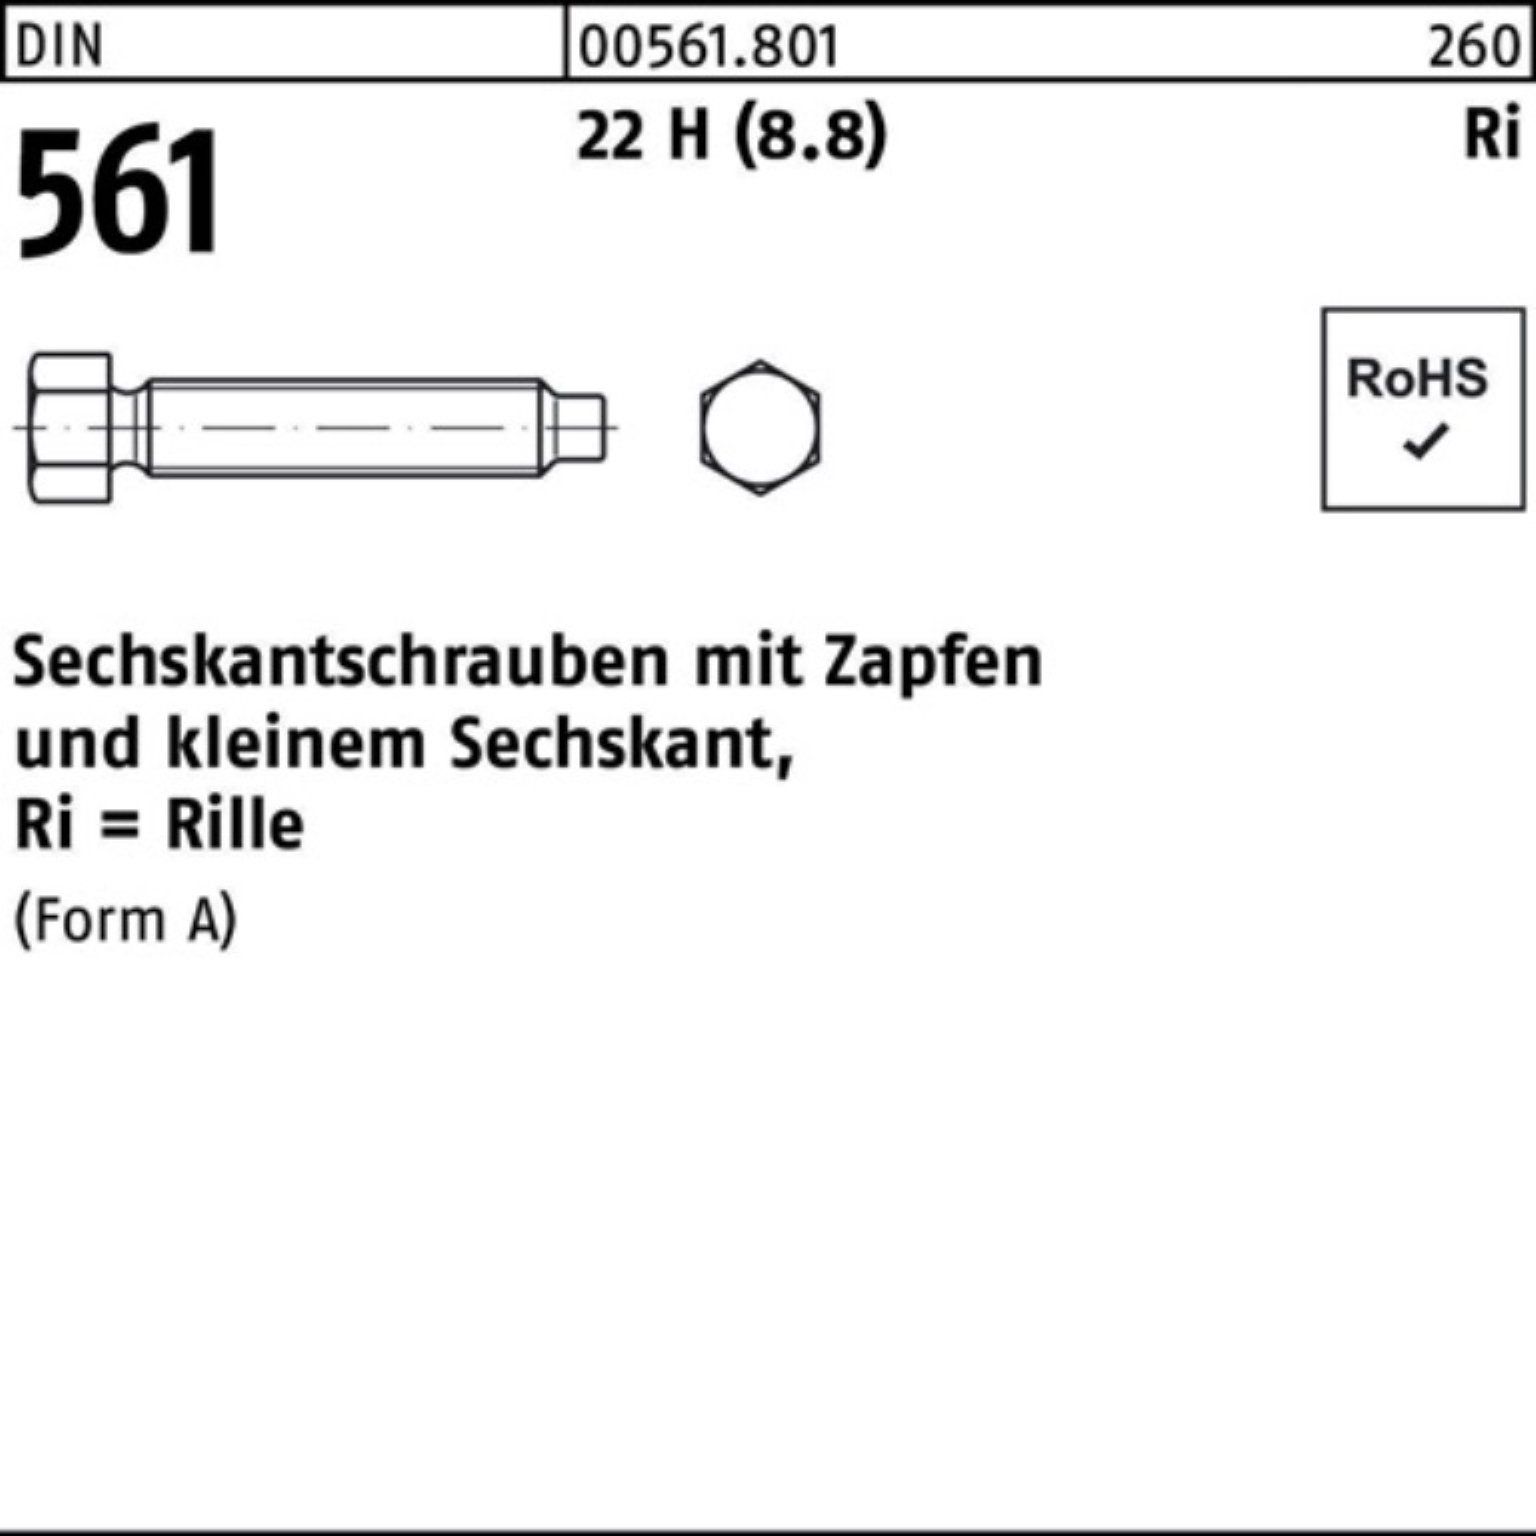 Reyher Sechskantschraube 1 120 H AM 561 Sechskantschraube 22 Zapfen 100er Pack DIN St (8.8) 24x